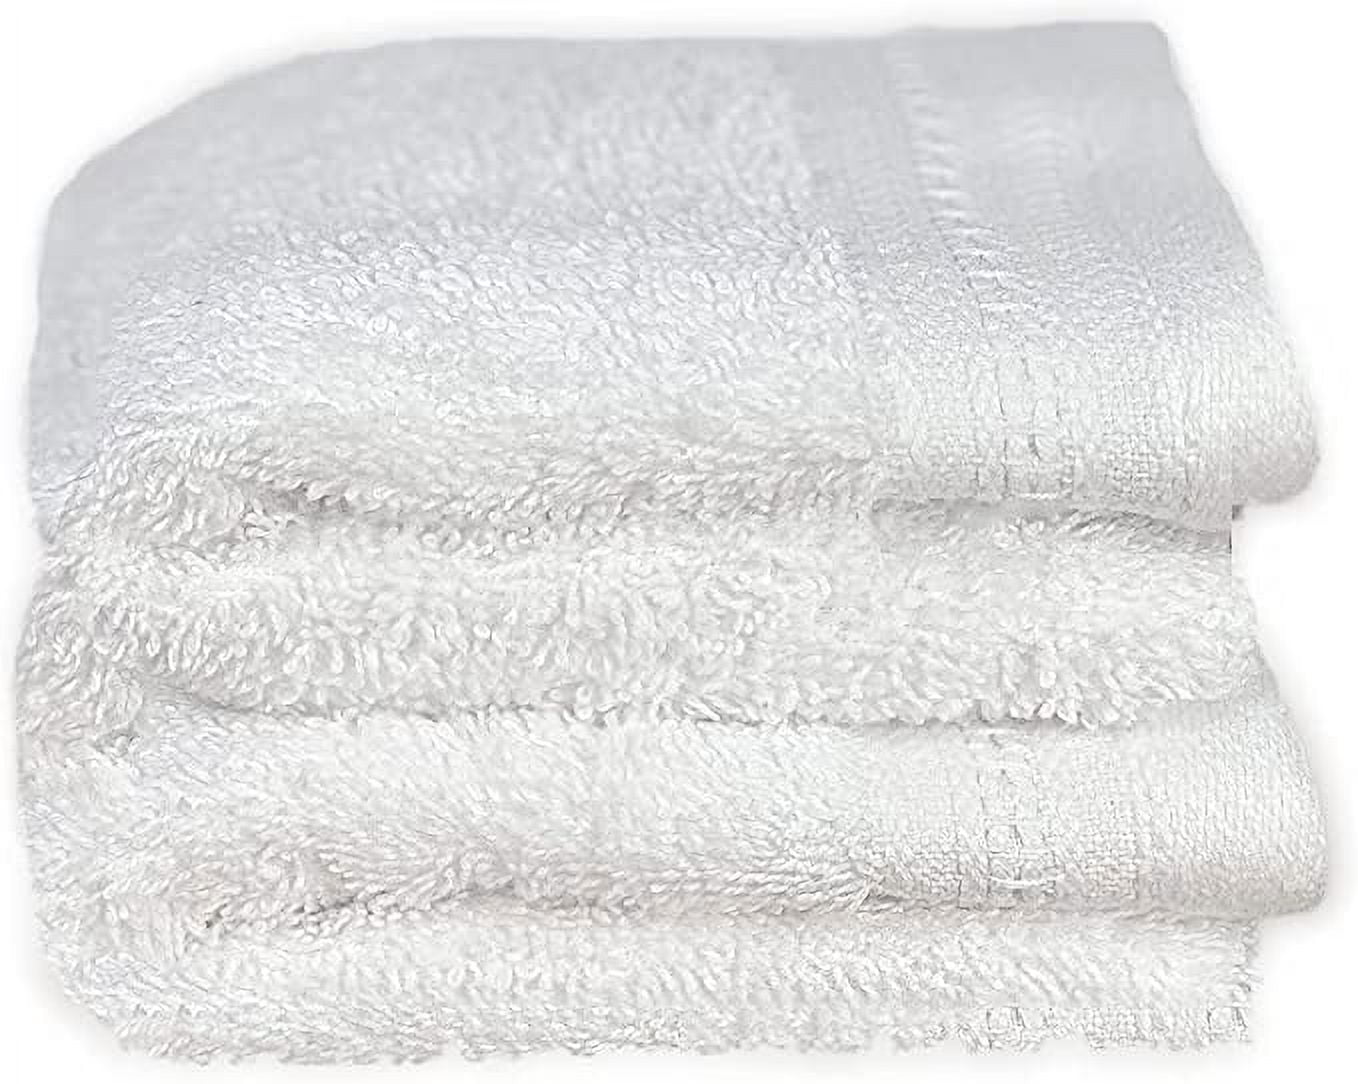 Kaufman - Solid Color ,Hotel Quality Bath Towels, 100% Ring Spun Cotton,  Absorbent Towels 2-PK (27x56)